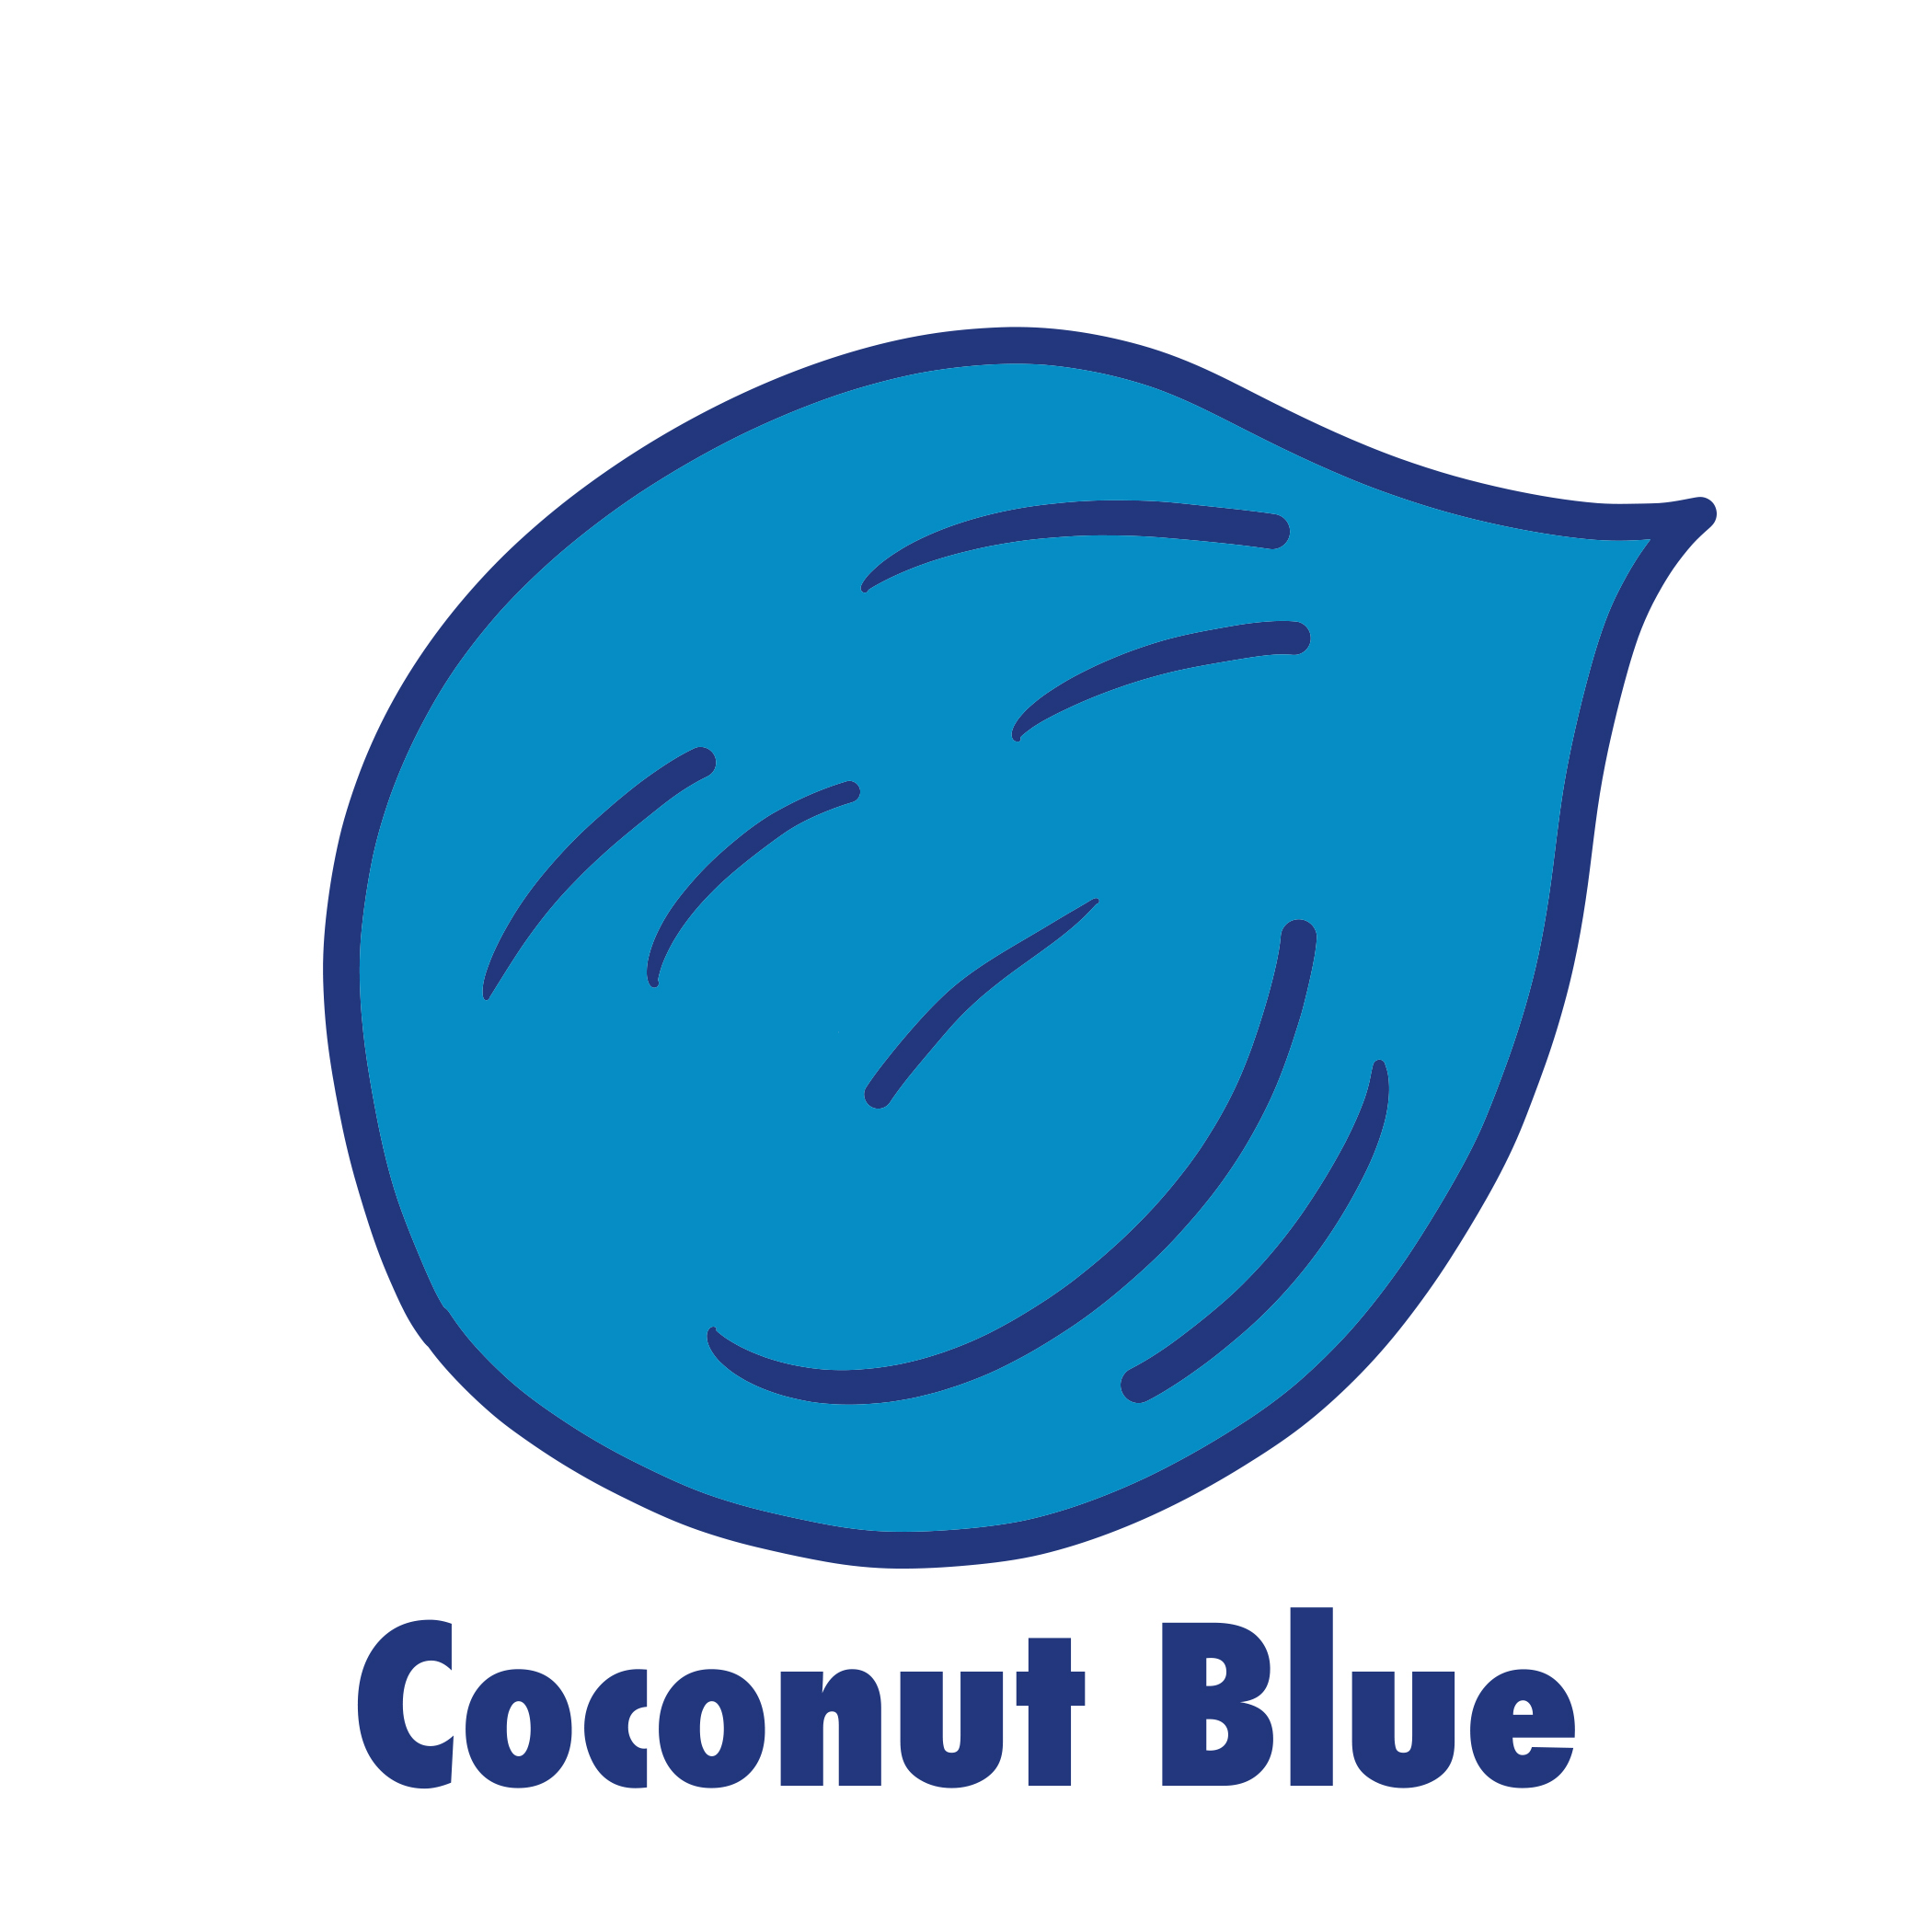 Coconut blue